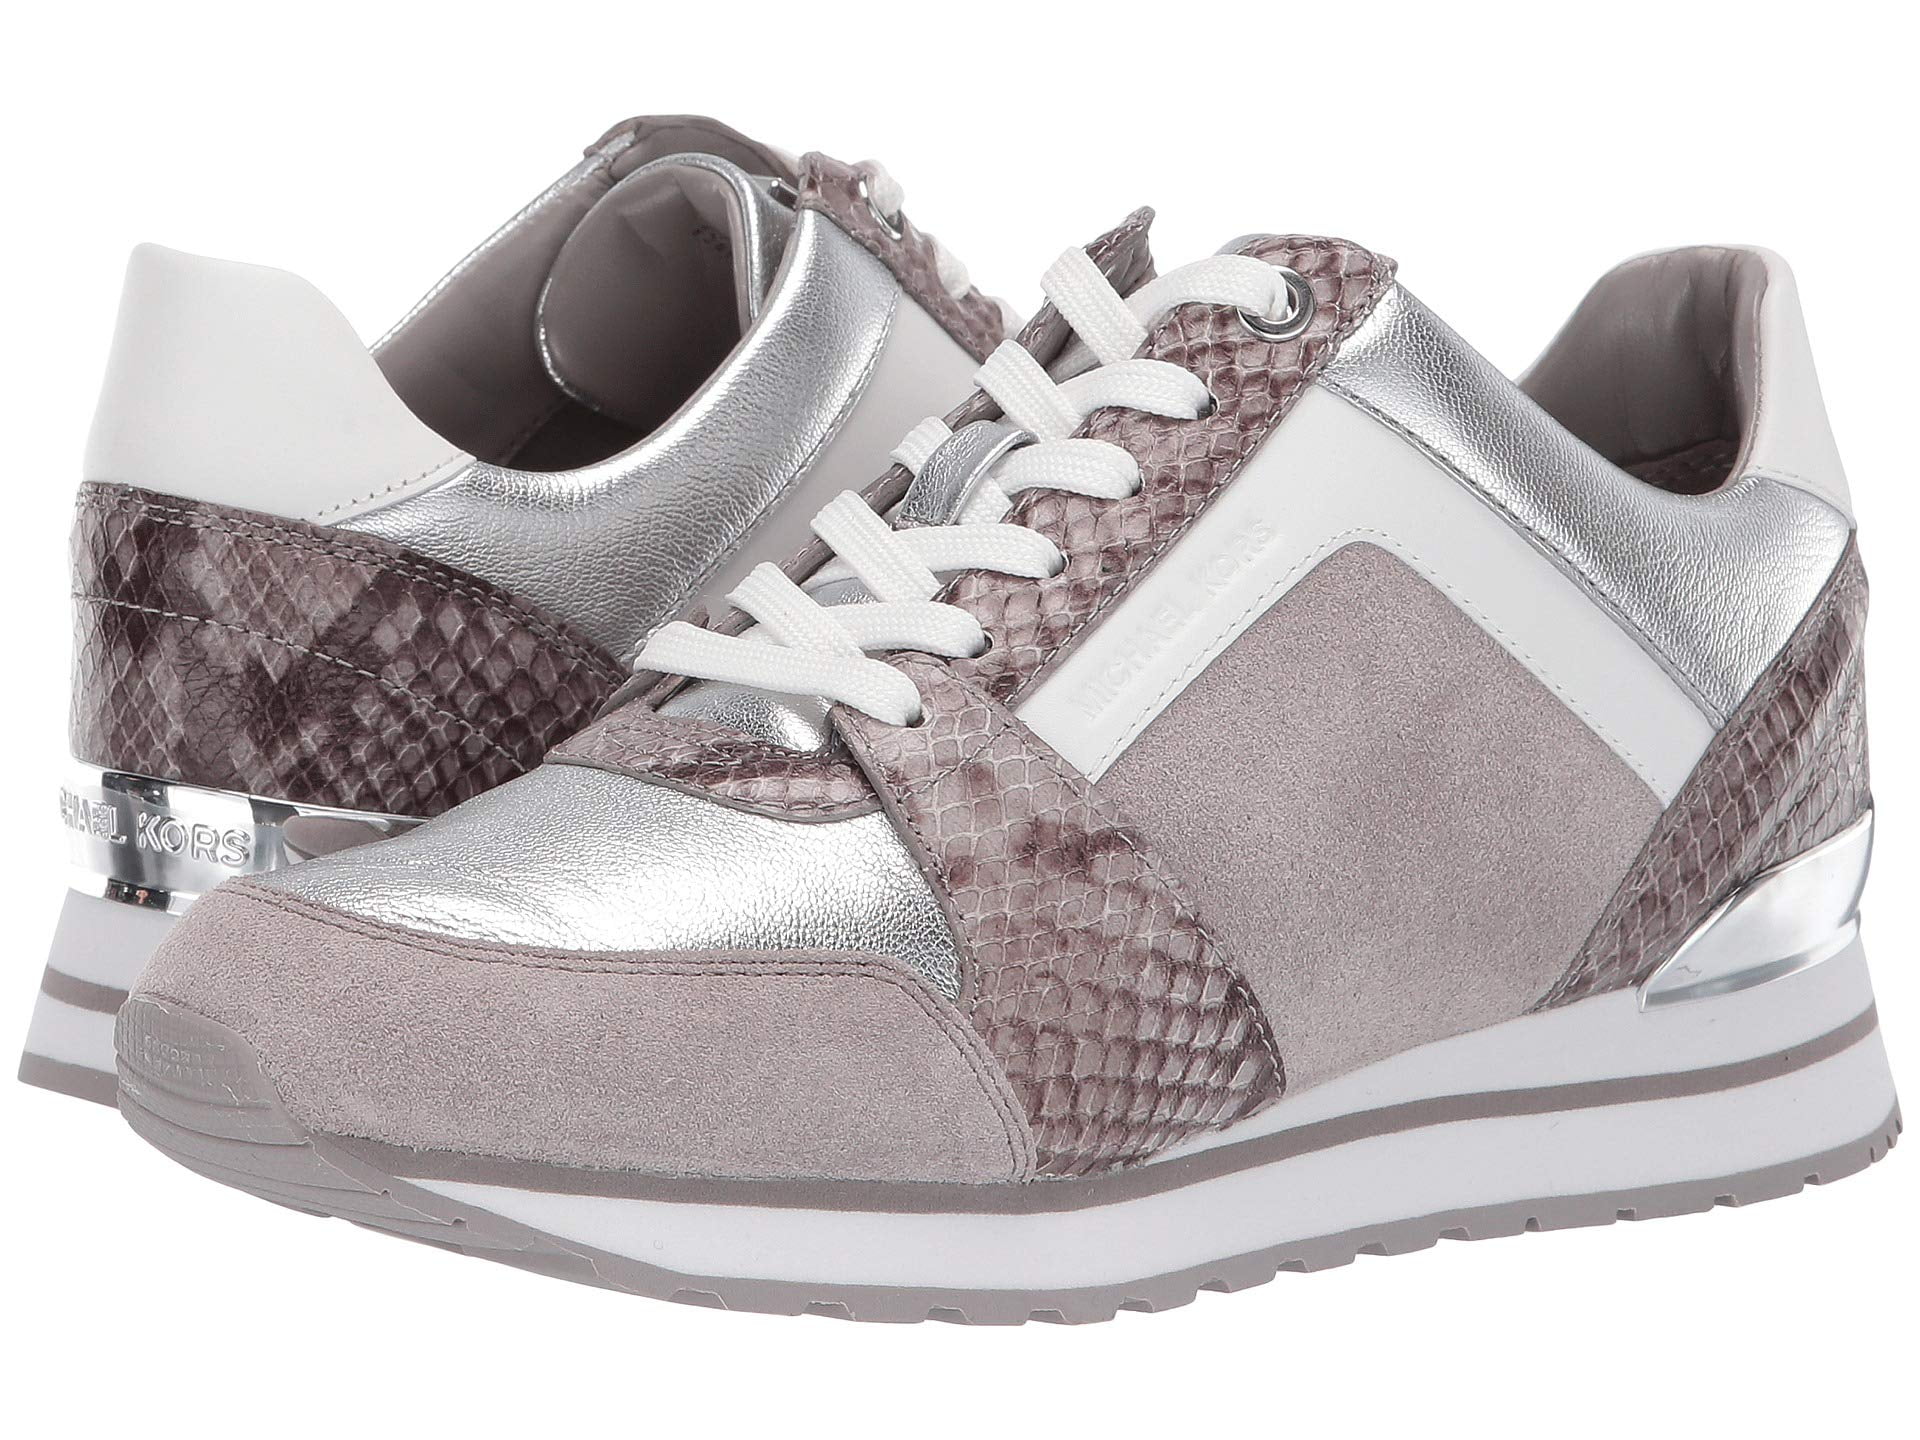 Verbieden Wens charme Michael Kors MK Women's Billie Trainer Suede Sneakers Shoes Pearl Grey (10)  - Walmart.com